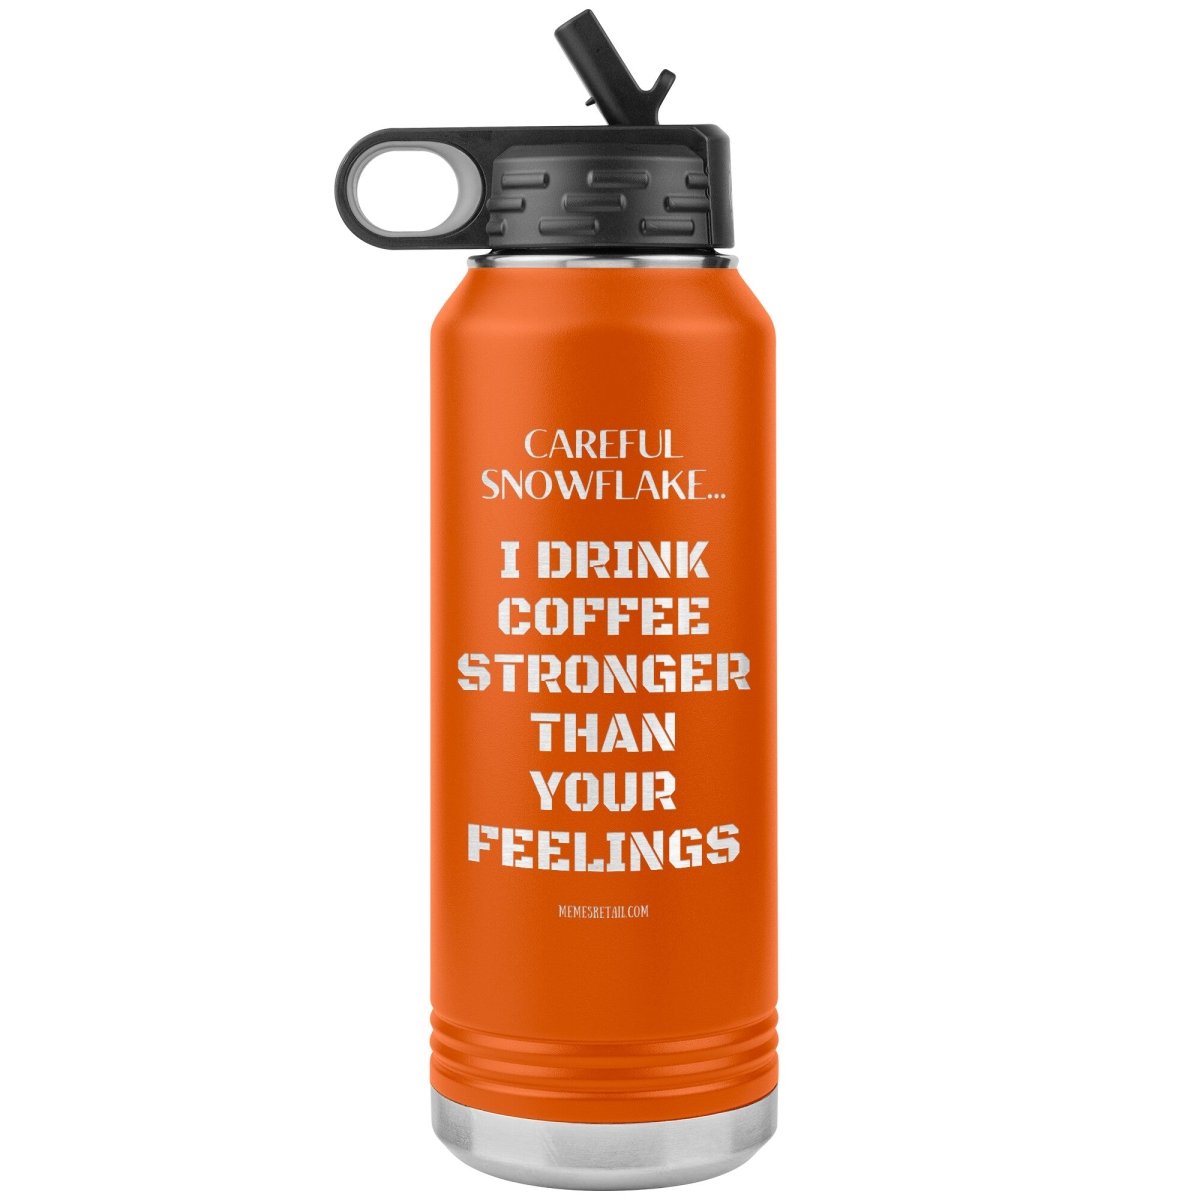 Careful Snowflake... I Drink Coffee Stronger Than Your Feelings 32 oz Water Bottle, Orange - MemesRetail.com